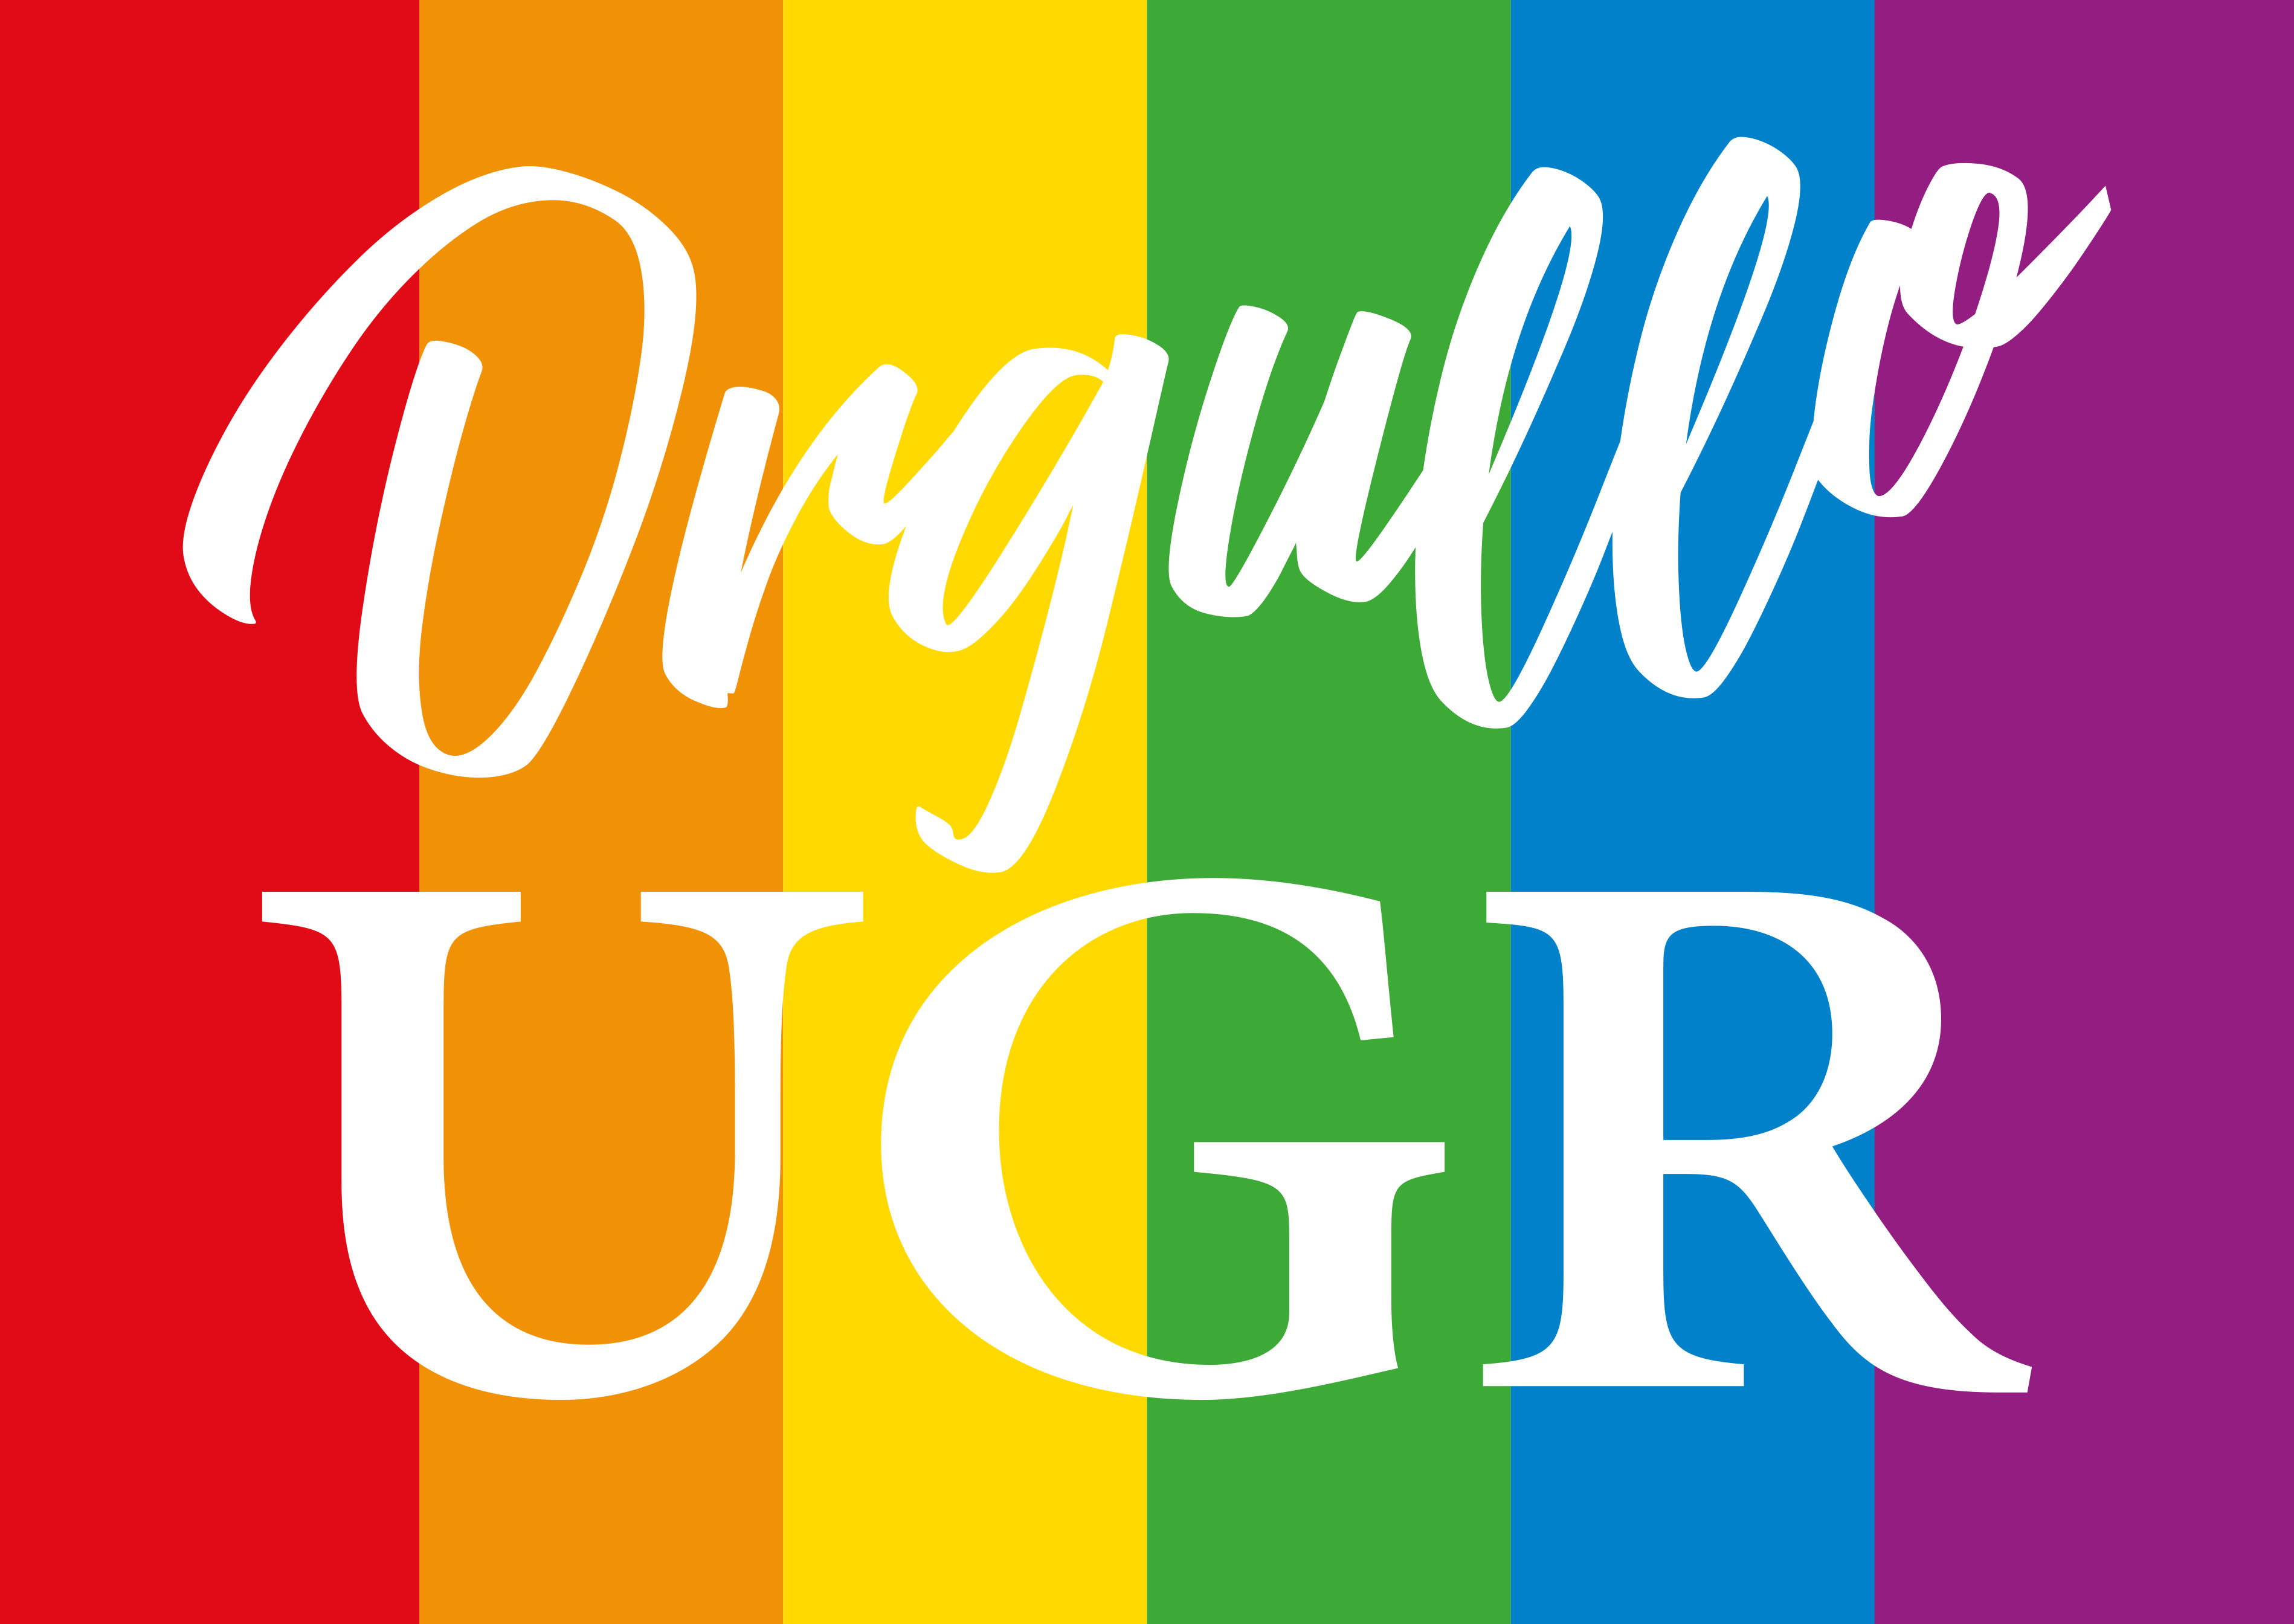 Logo Orgullo UGR